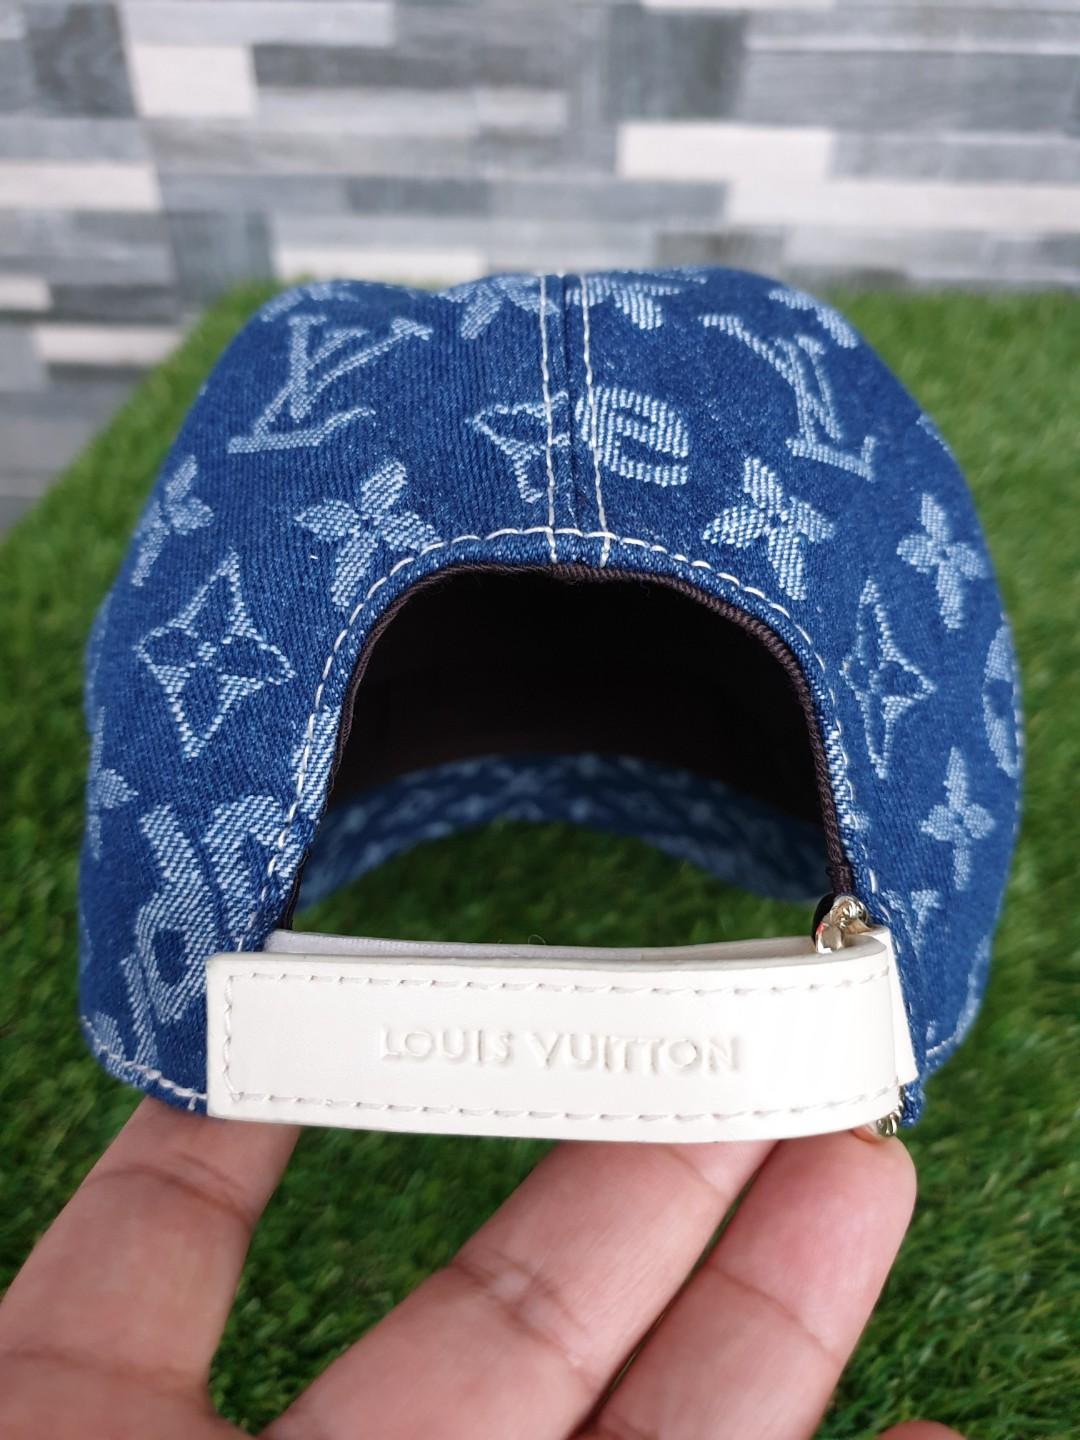 Louis Vuitton Monogram Washed Denim Cap